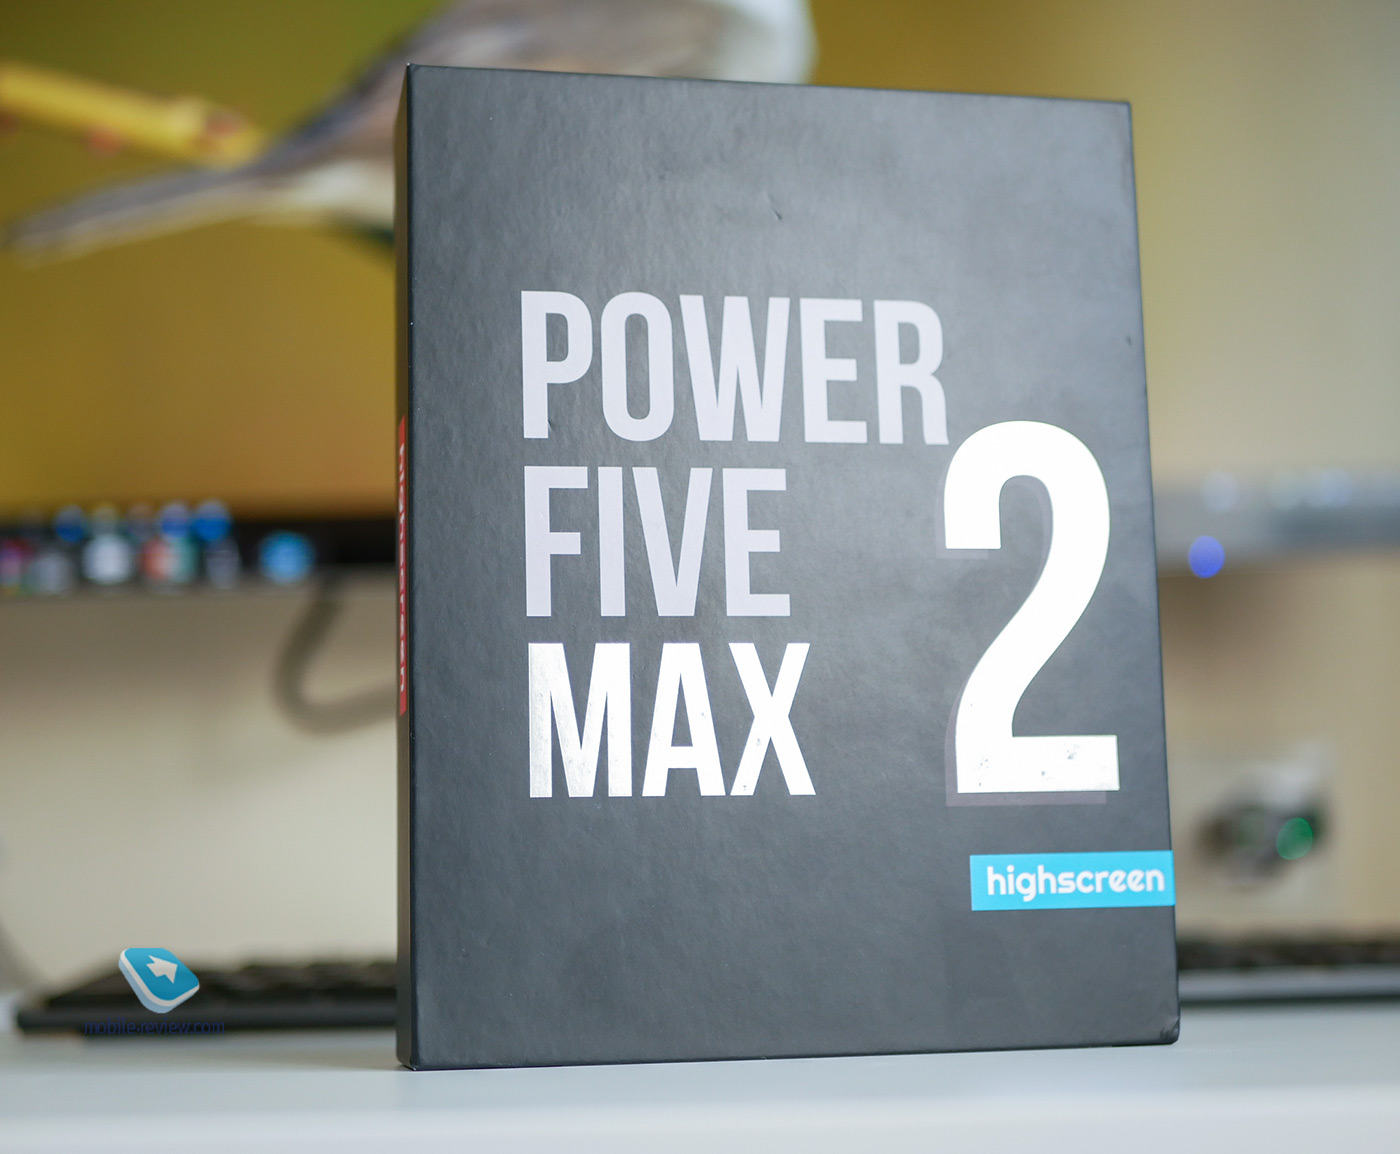 Highscreen Power Five Max 2